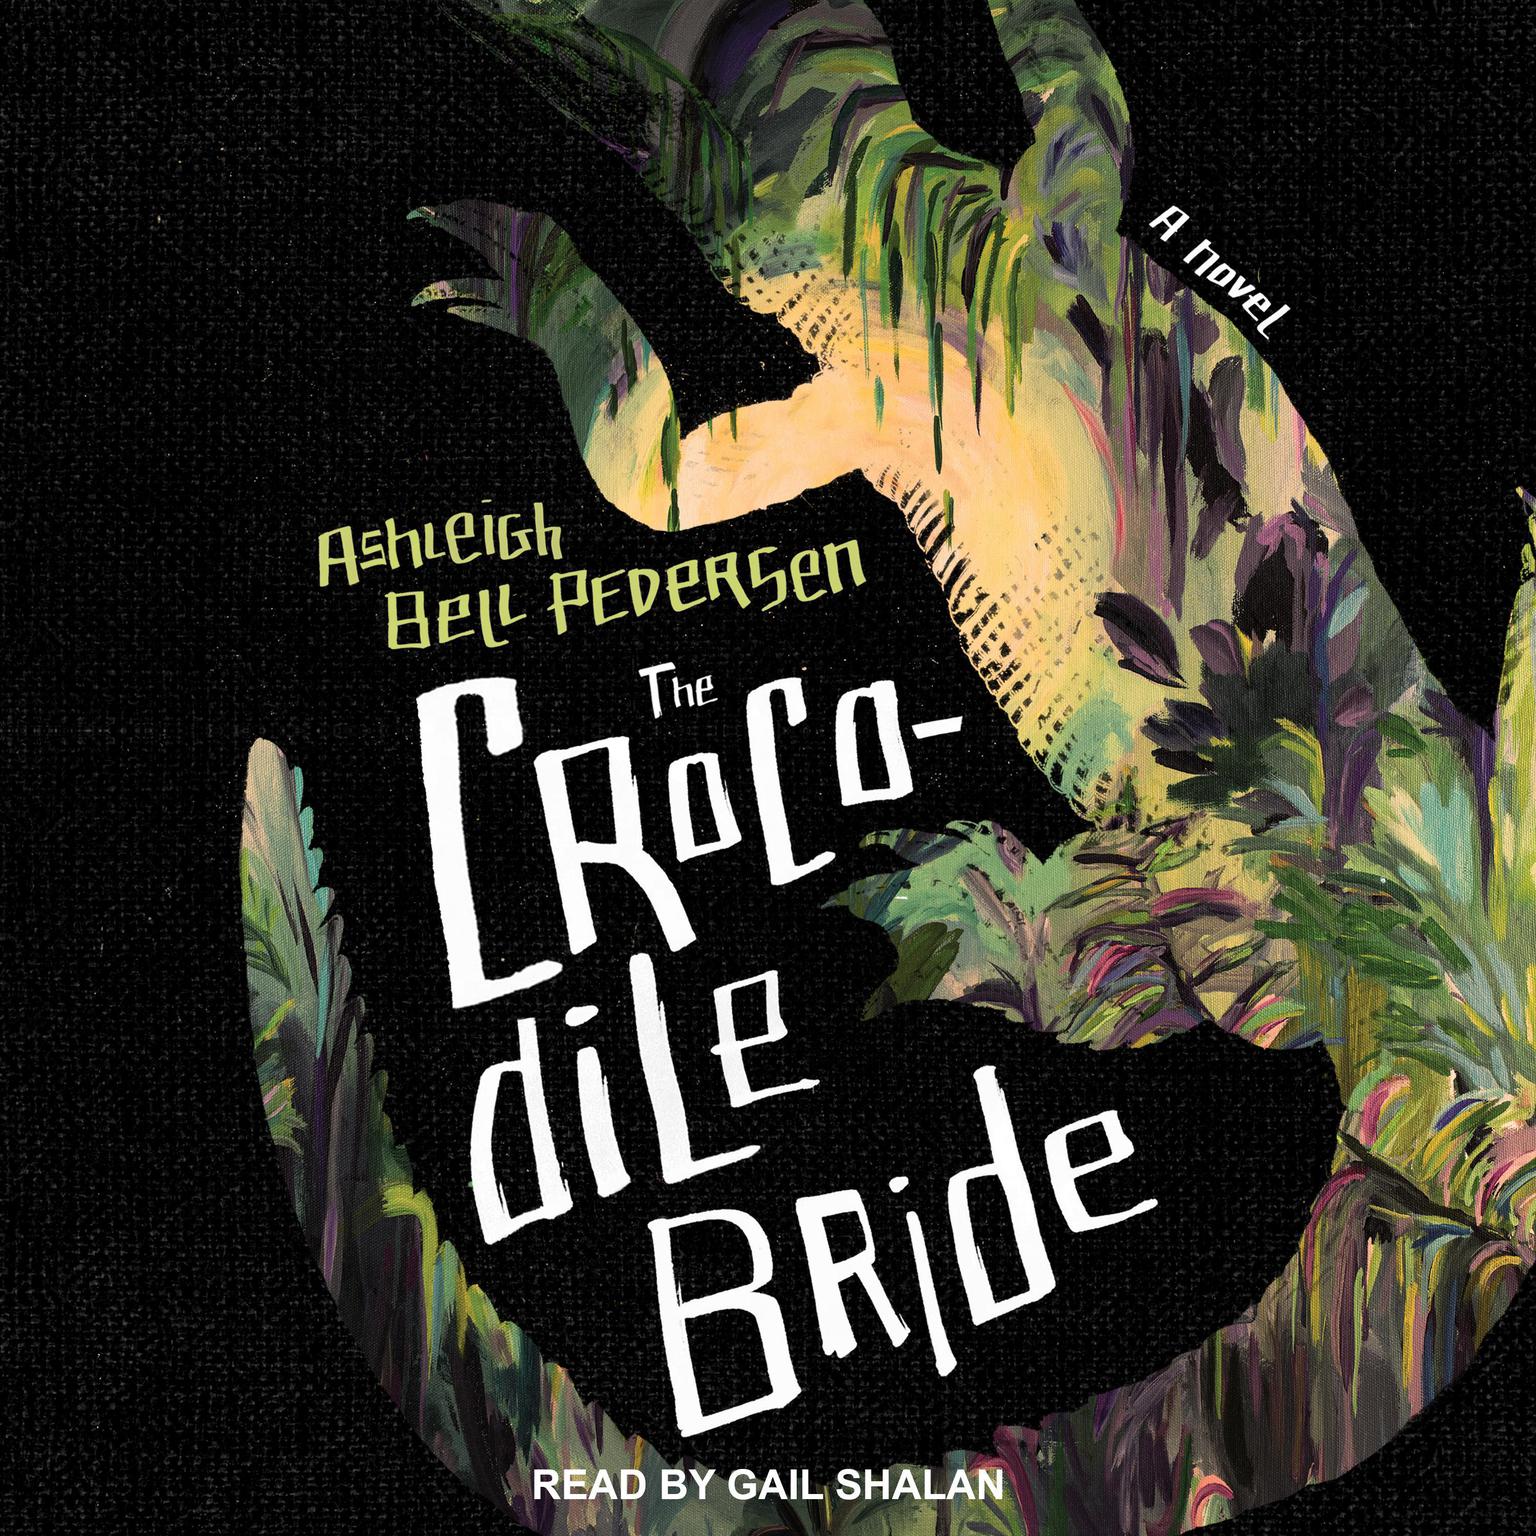 The Crocodile Bride Audiobook, by Ashleigh Bell Pedersen